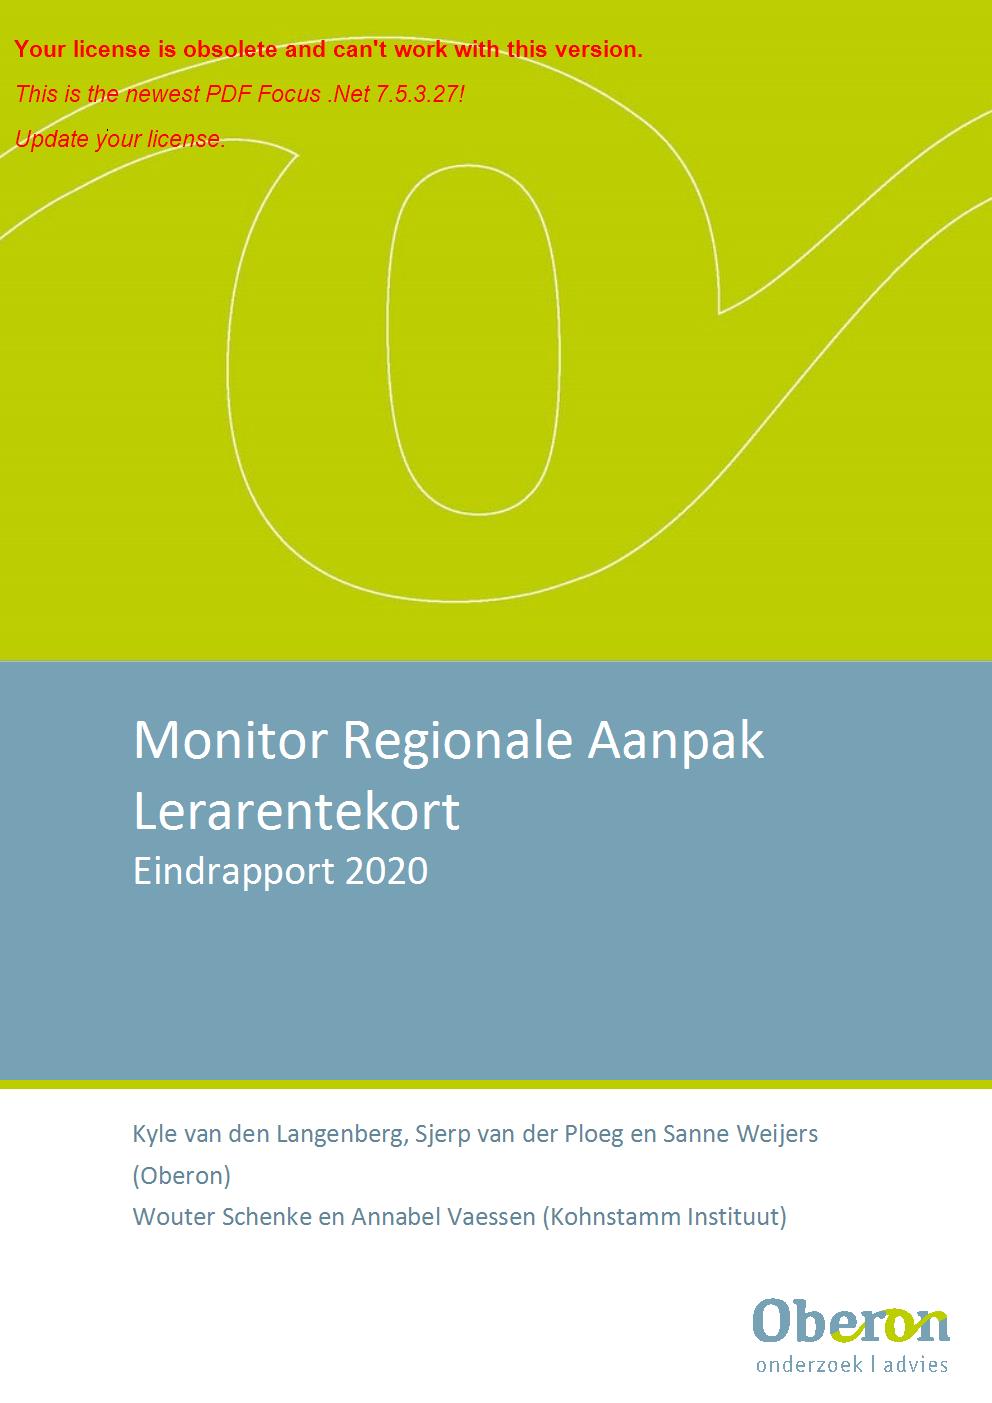 Eindrapport Monitor regionale aanpak lerarentekort - december 2020